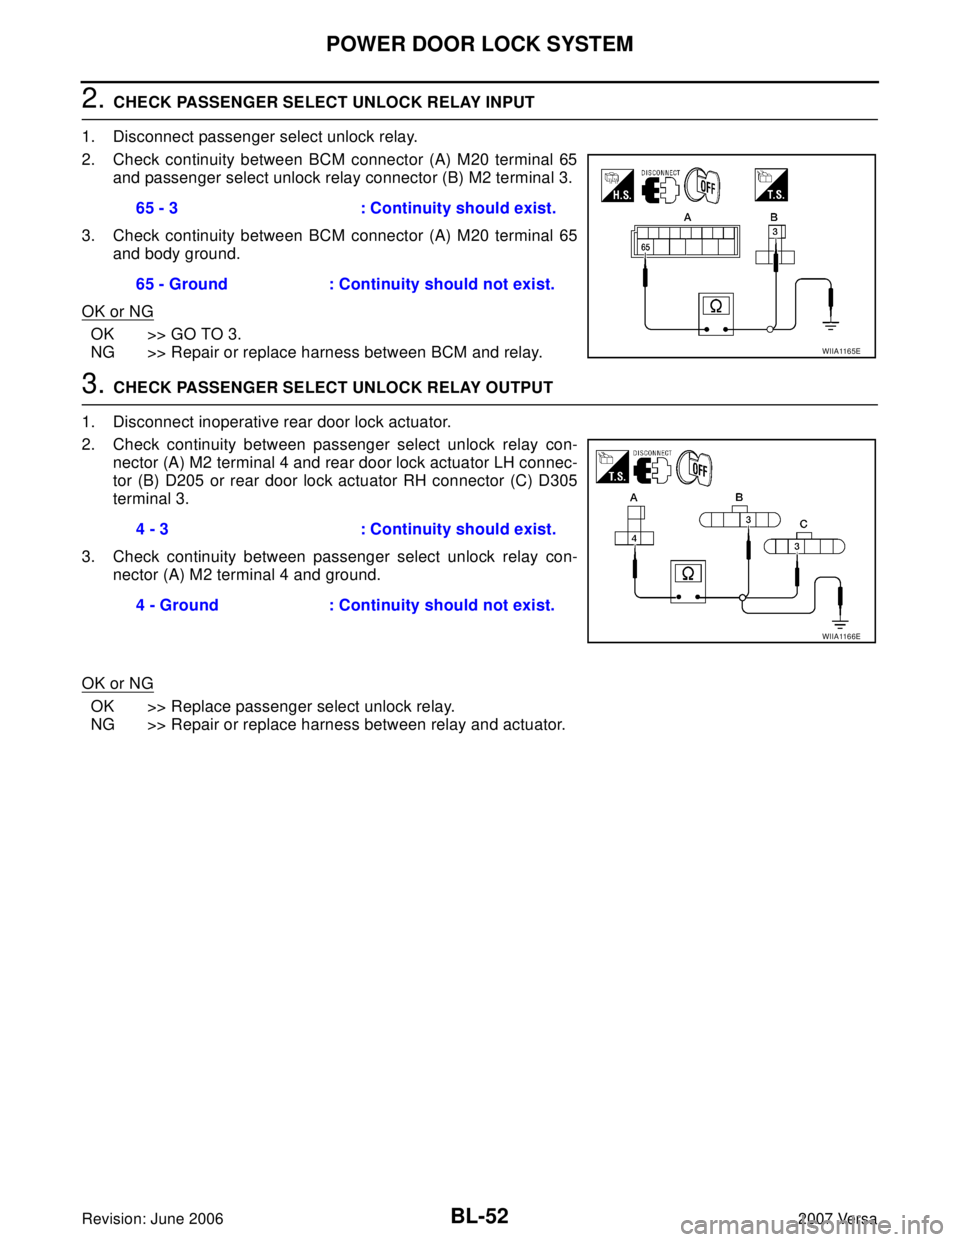 NISSAN VERSA 2006  Workshop  Service Repair Manual BL-52
POWER DOOR LOCK SYSTEM
Revision: June 20062007 Versa
2. CHECK PASSENGER SELECT UNLOCK RELAY INPUT
1. Disconnect passenger select unlock relay.
2. Check continuity between BCM connector (A) M20 t